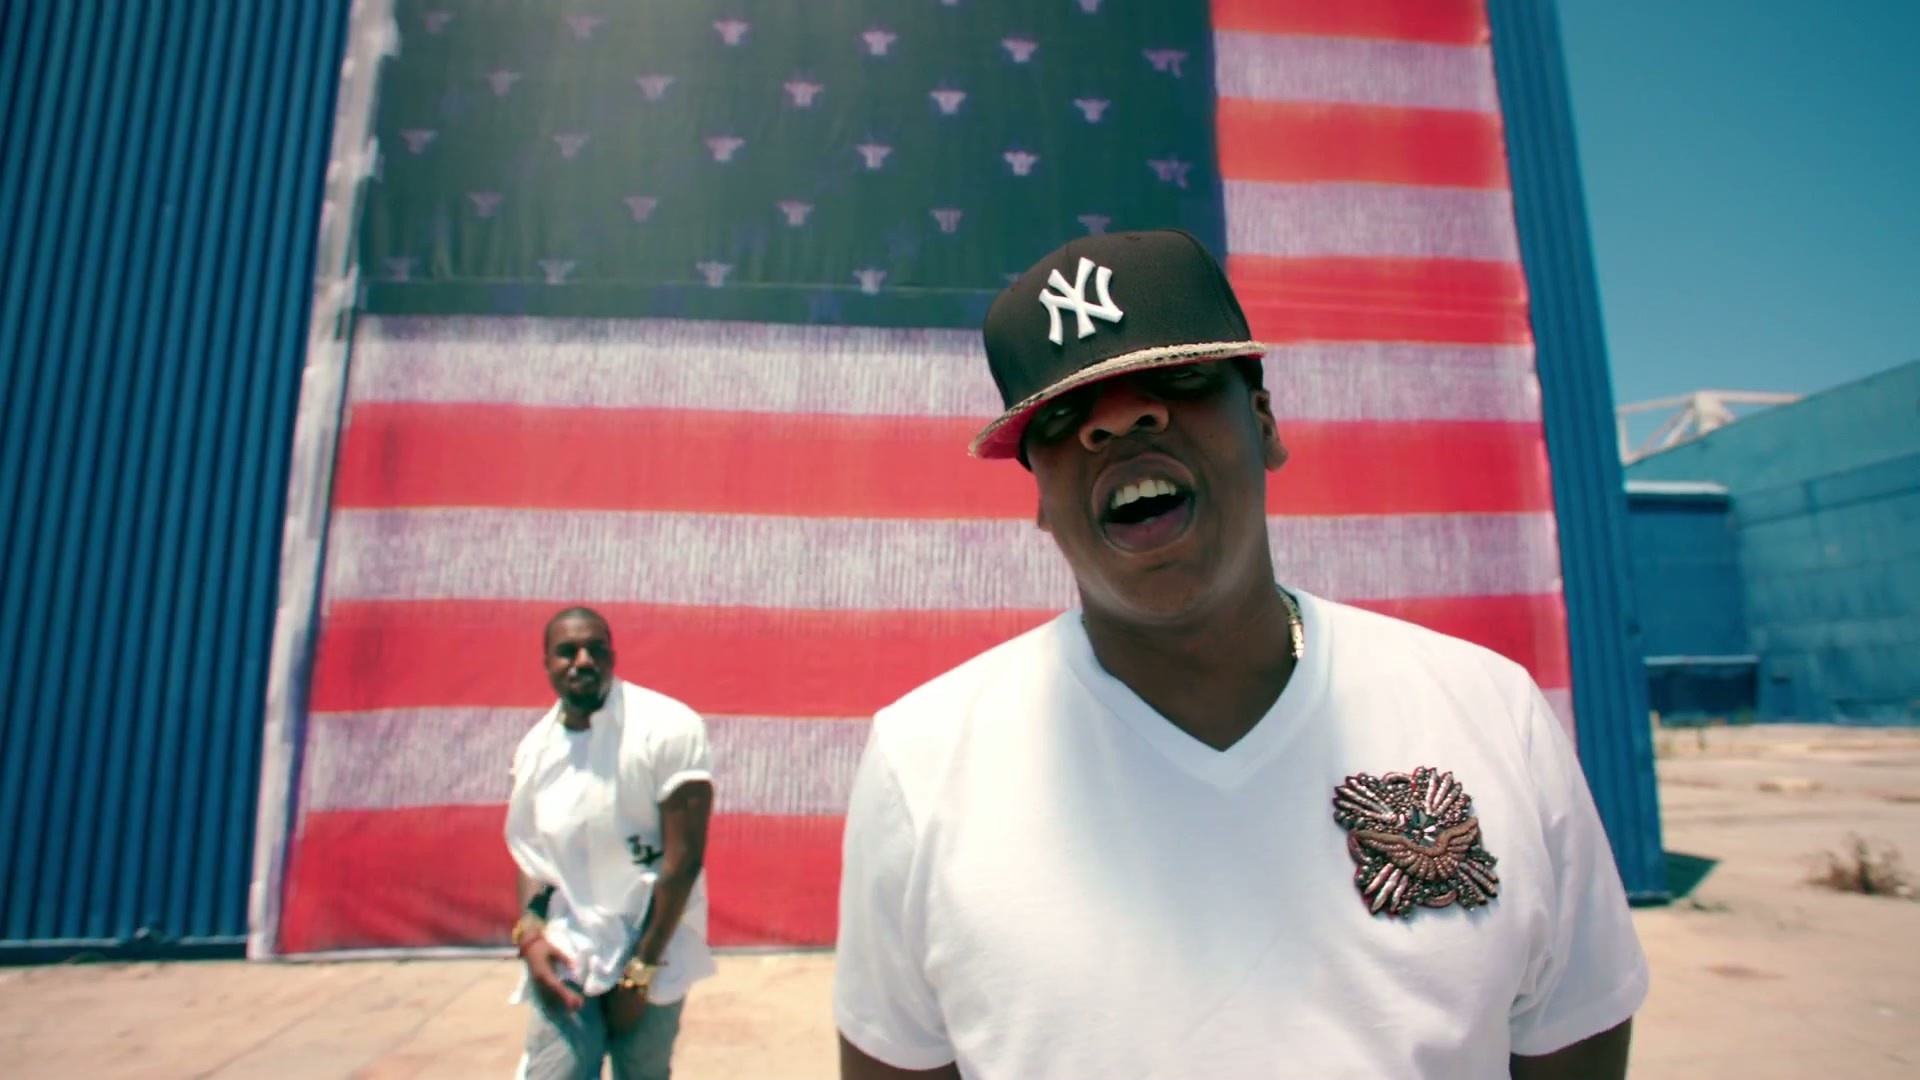 Jay-Z: The founder of the urban clothing brand Rocawear alongside Damon Dash. 1920x1080 Full HD Wallpaper.